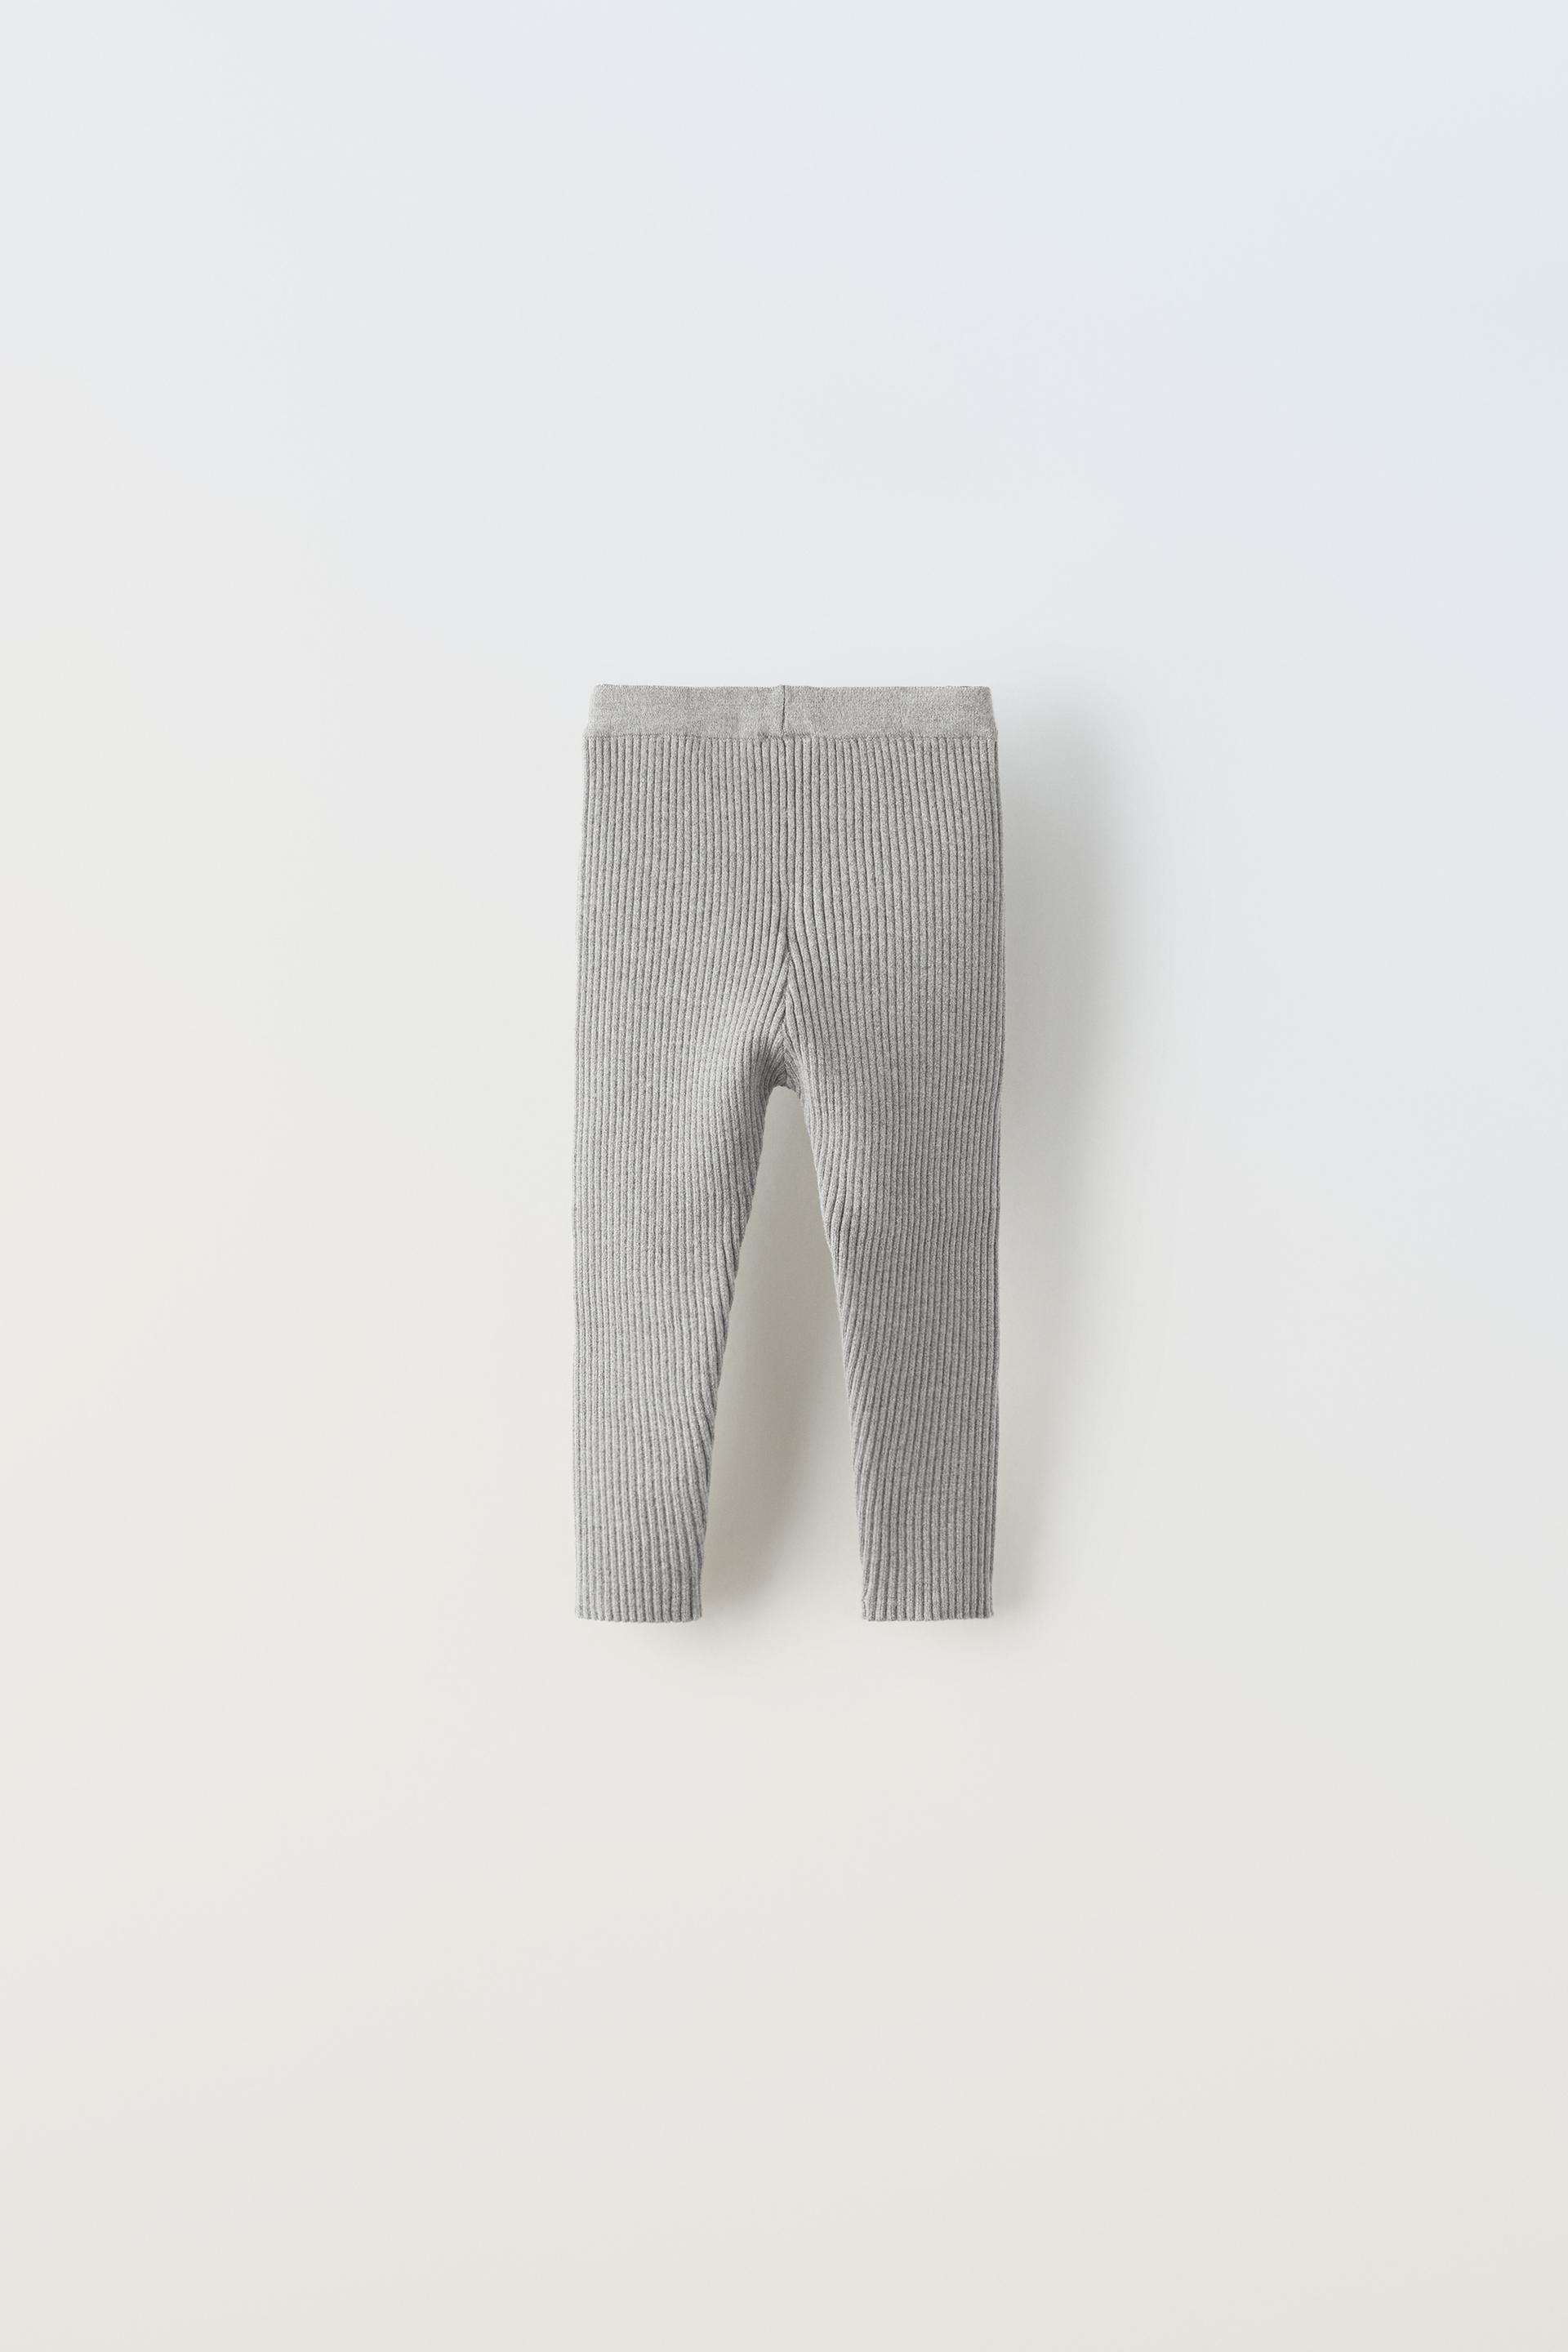 Kids Leggings in Light Grey Soft Knit l OM683 – OMAMImini